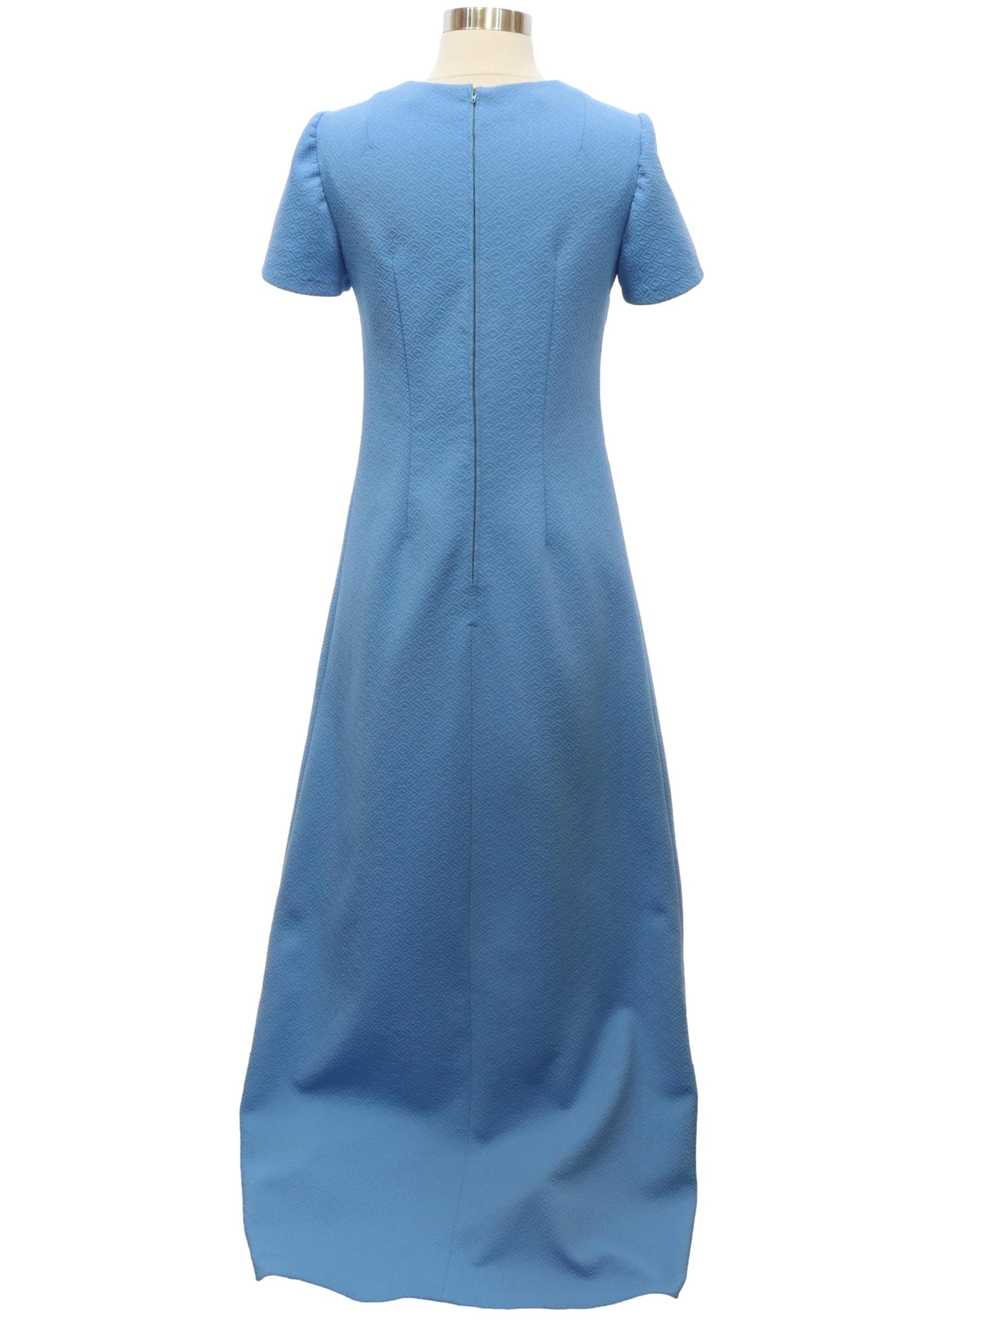 1960's Knit Maxi Dress - image 3